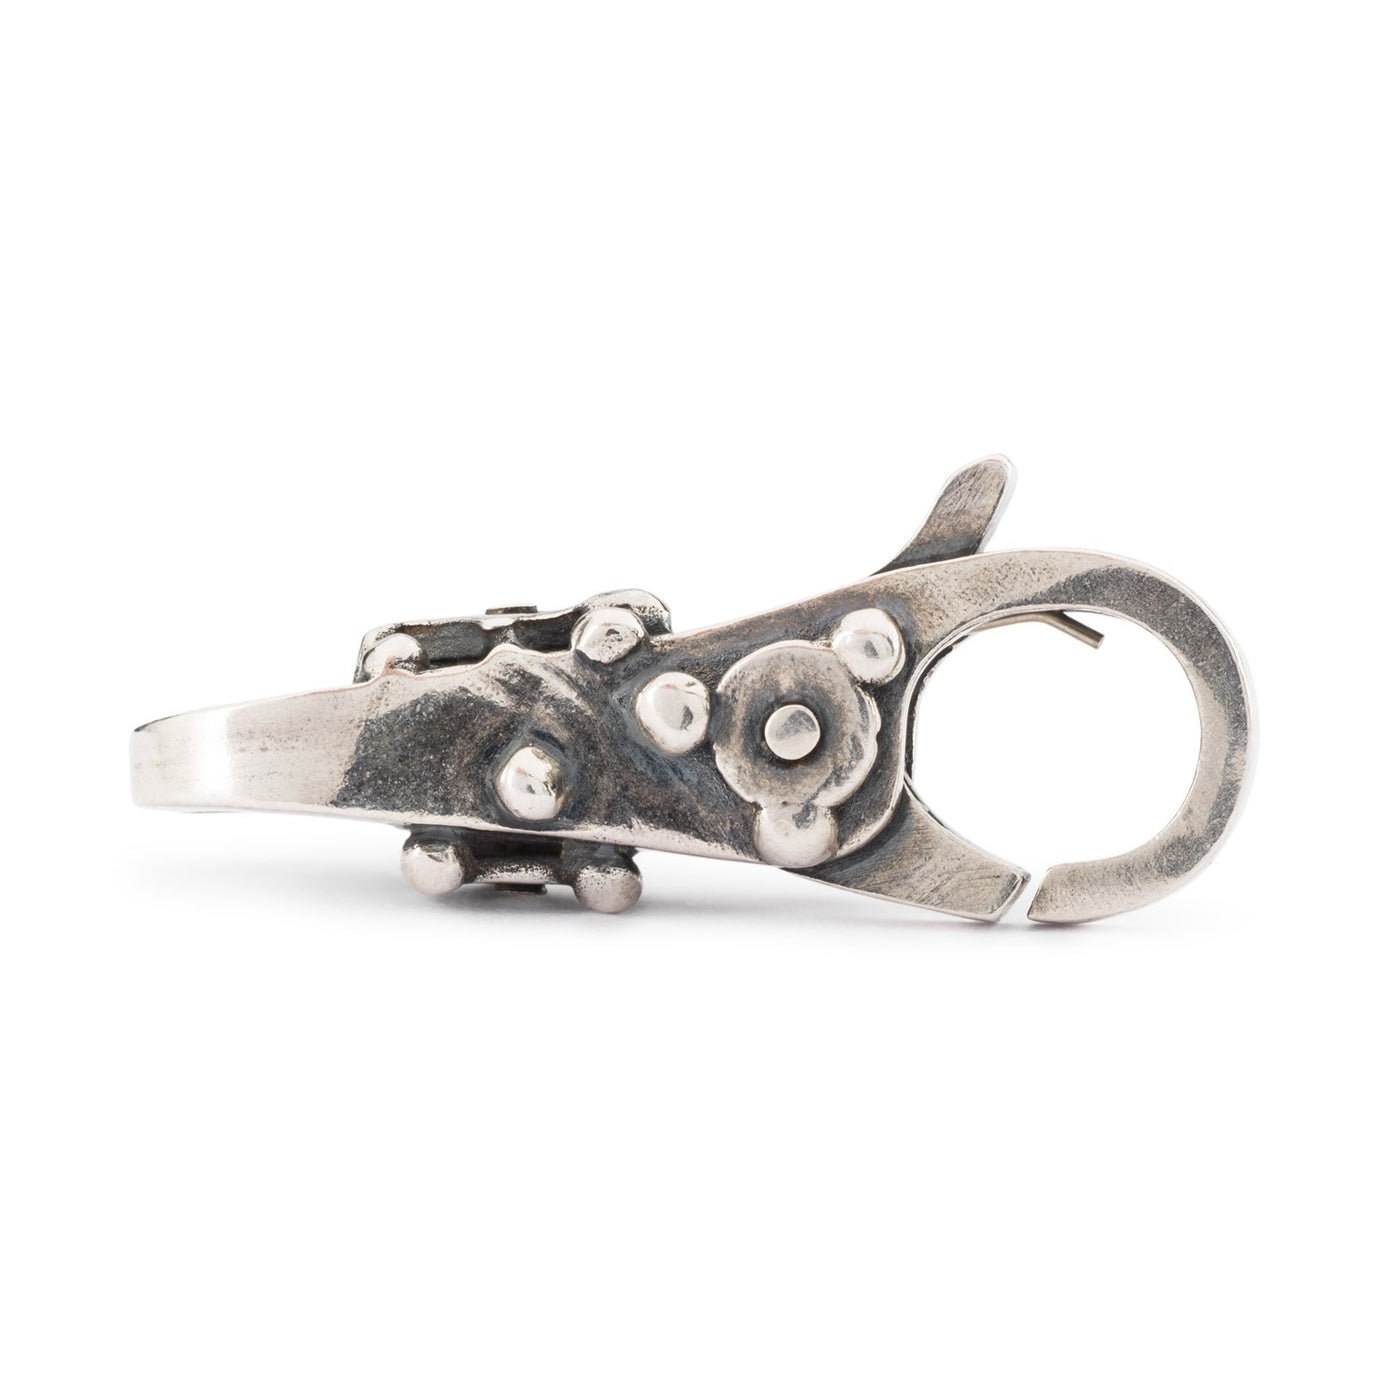 Sterlingsølv lås med små sølv-dugdråber over det hele for at sikre dit Trollbeads smykke.